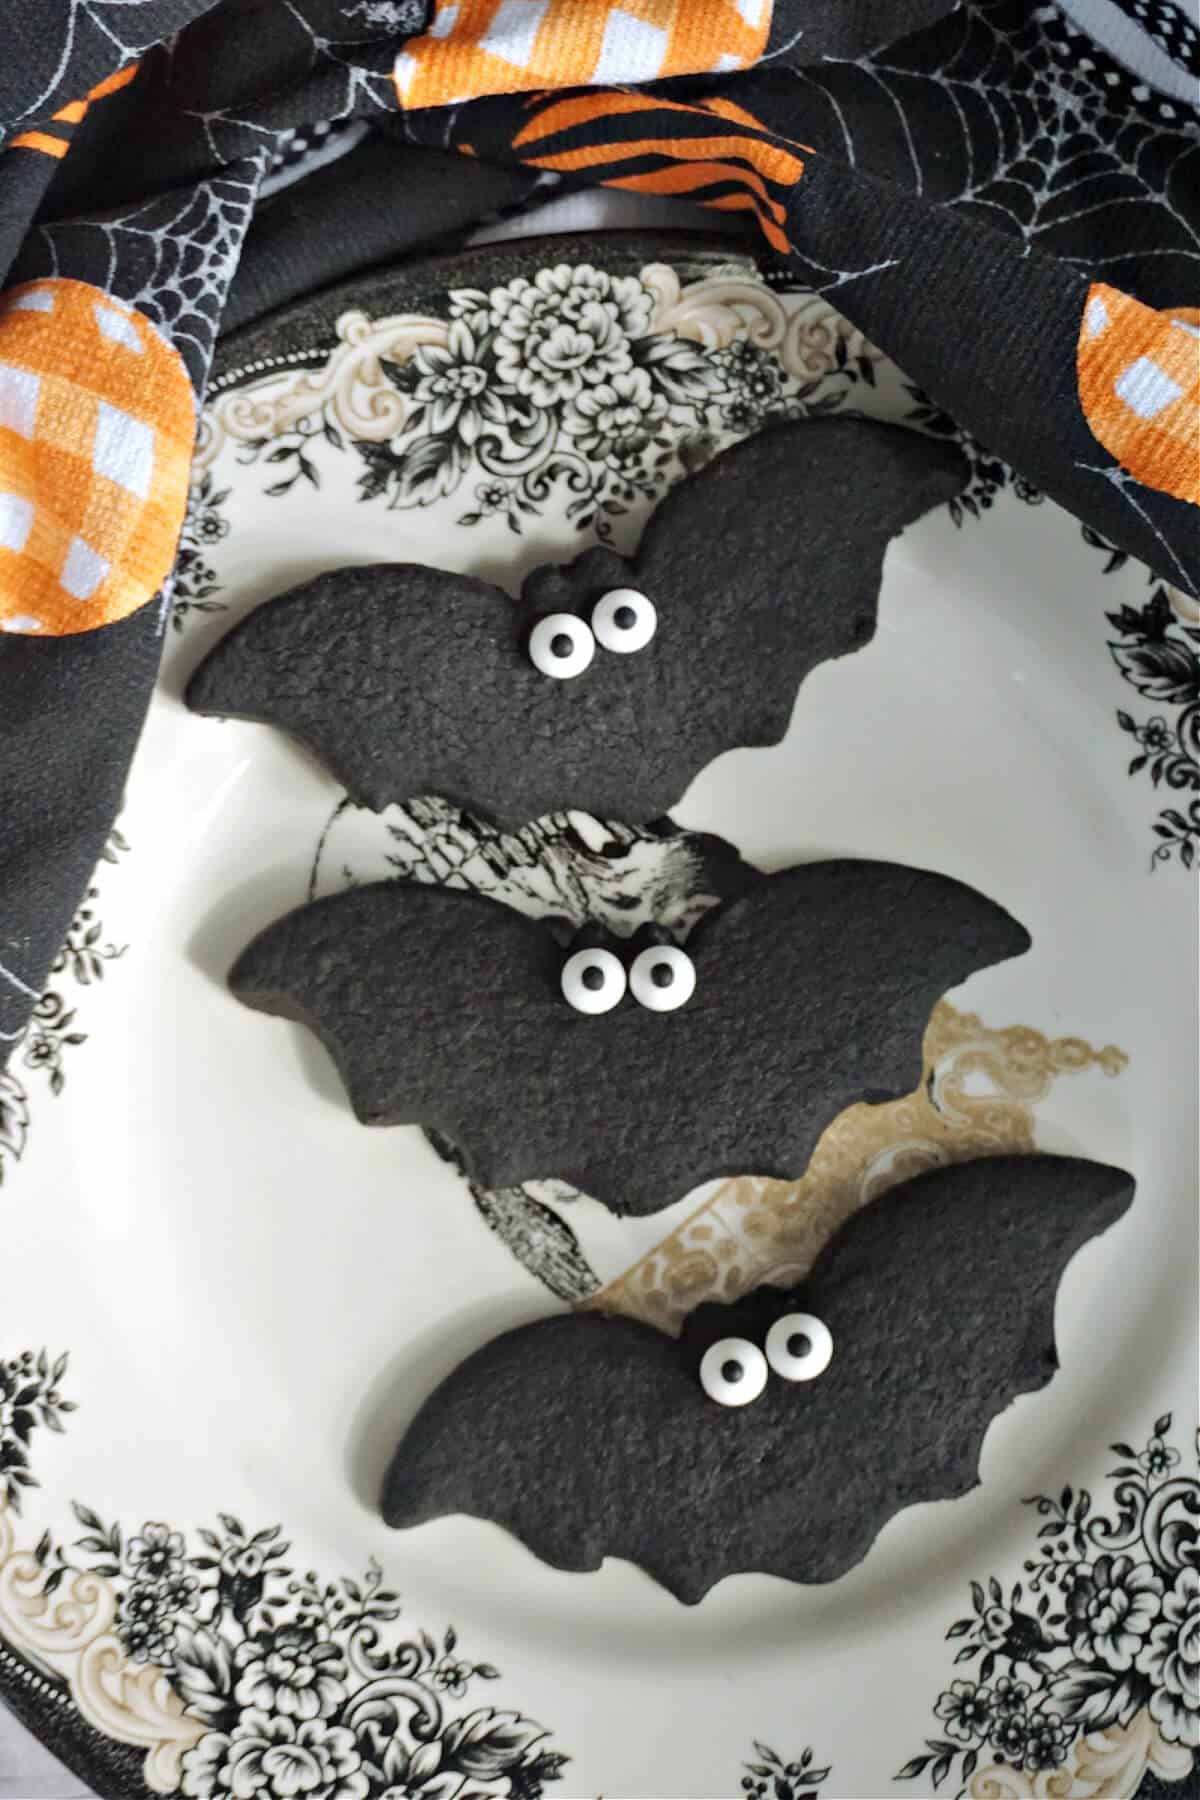 3 bat cookies on a Halloween plate.